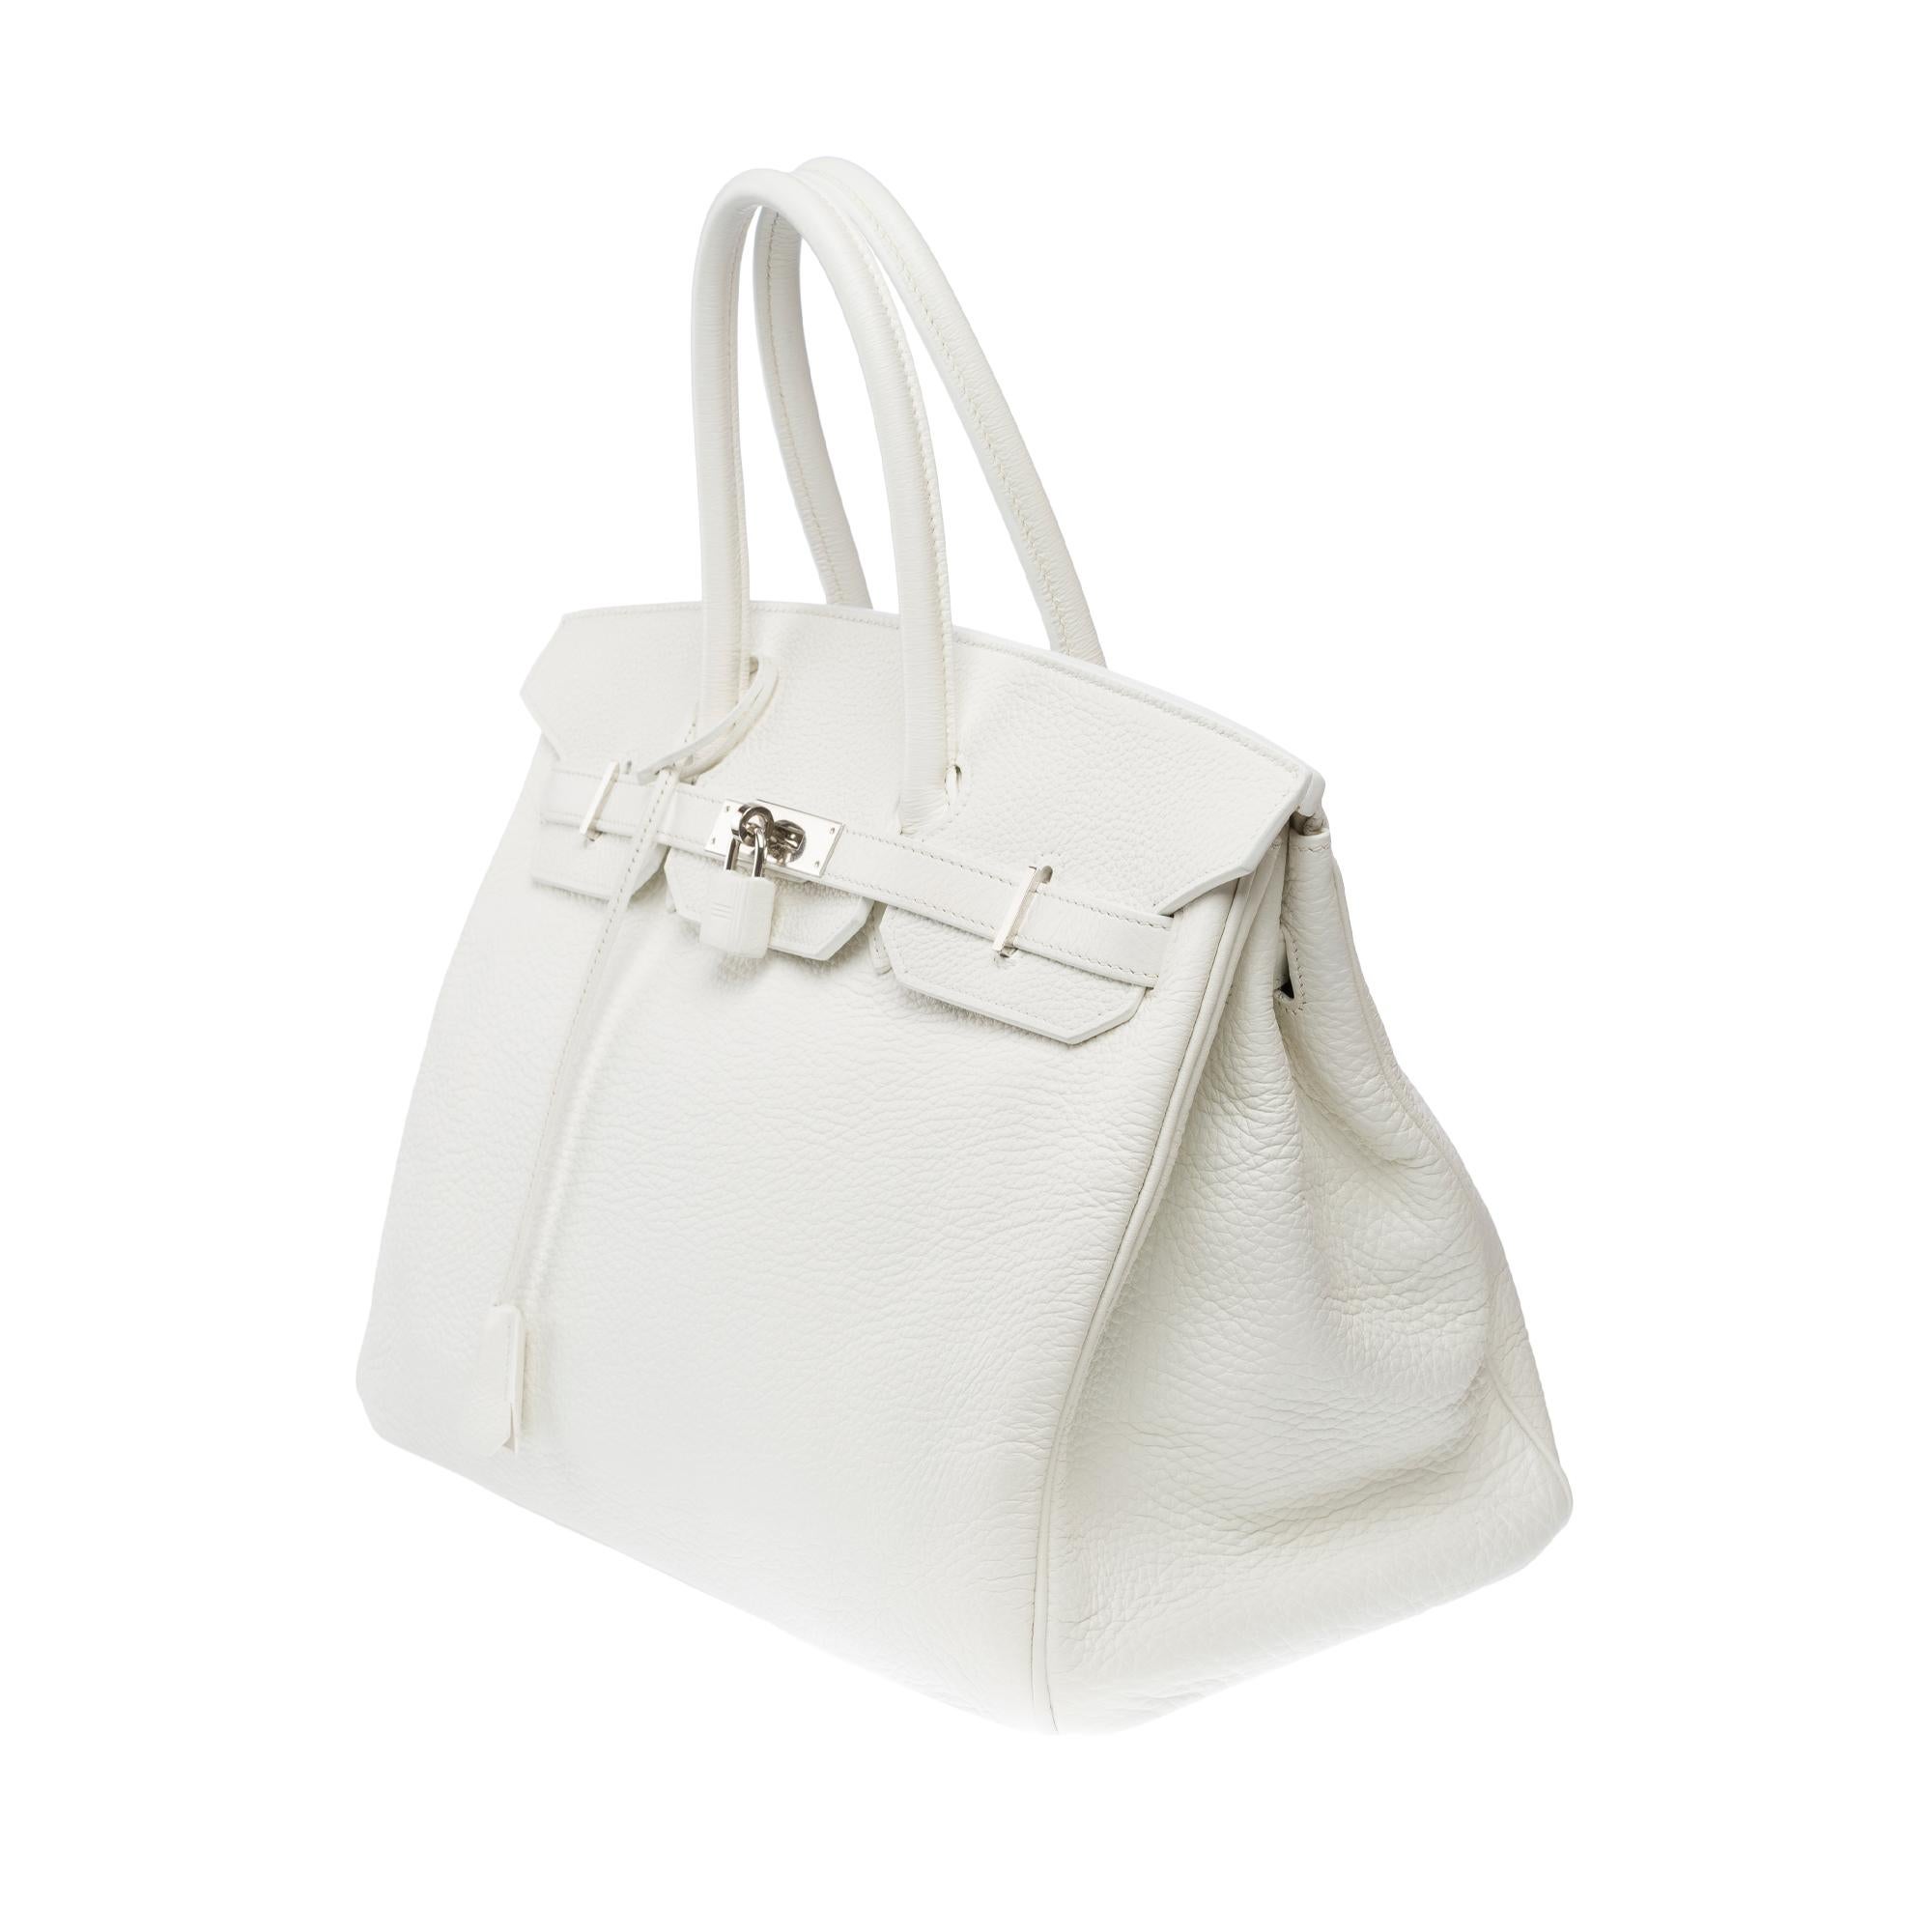 Stunning Hermès Birkin 35 handbag in White Taurillon Clemence leather, SHW 1